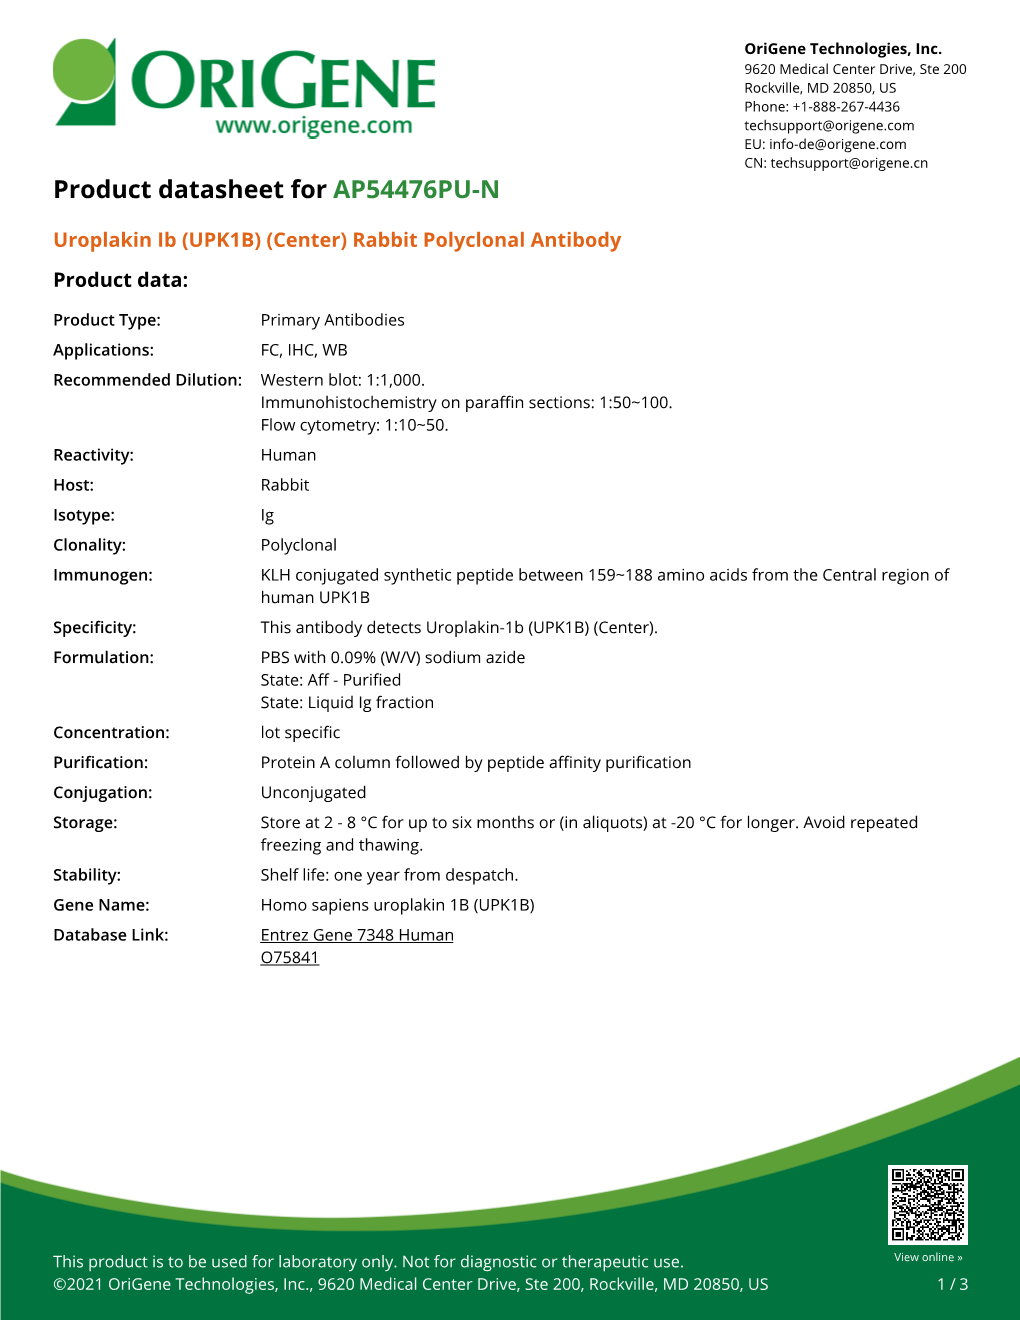 Uroplakin Ib (UPK1B) (Center) Rabbit Polyclonal Antibody Product Data